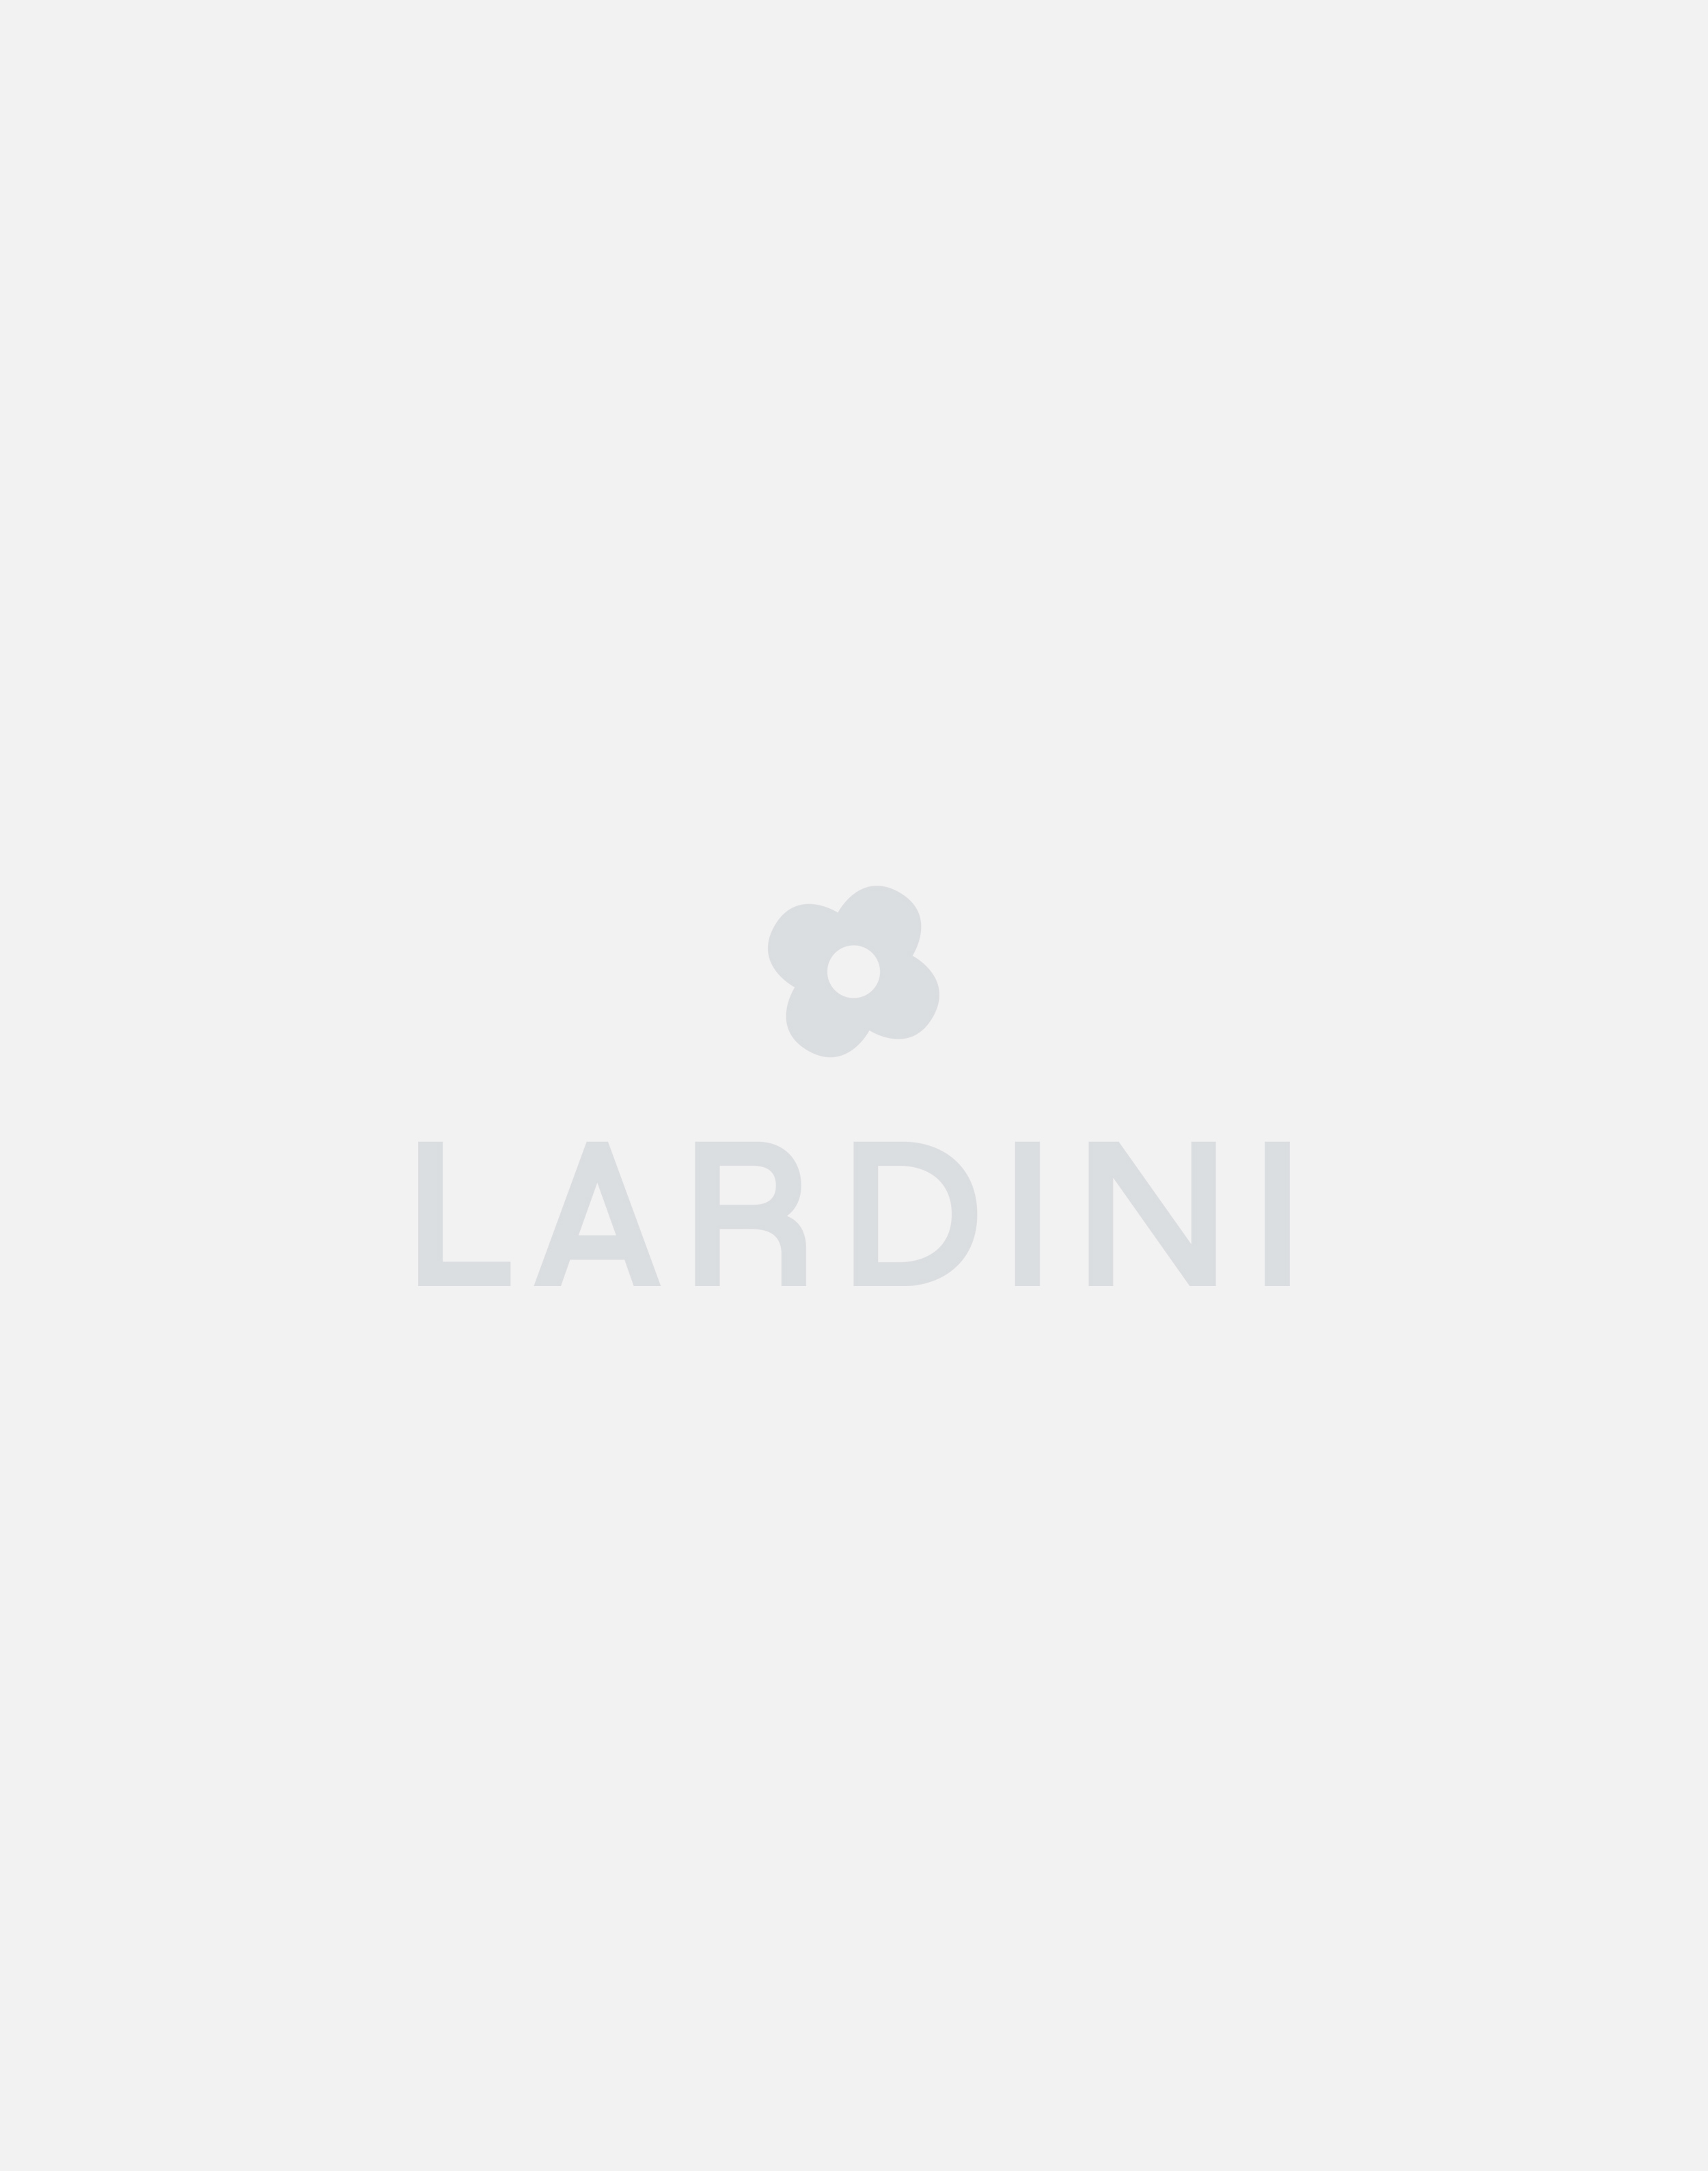 Green cotton crêpe cardigan - Luigi Lardini capsule